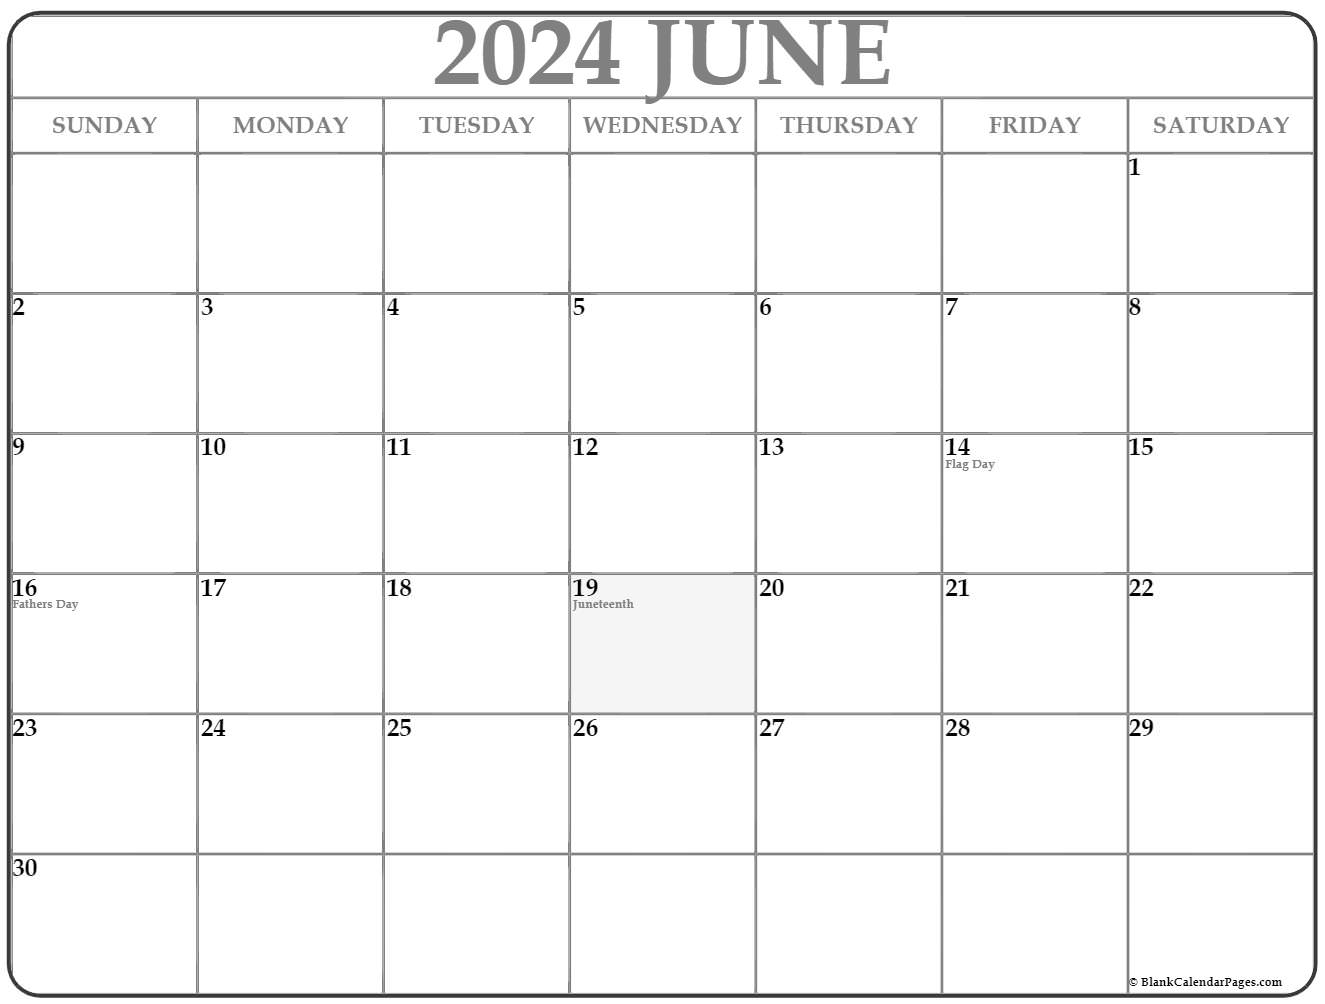 June 2021 Calendar With Holidays